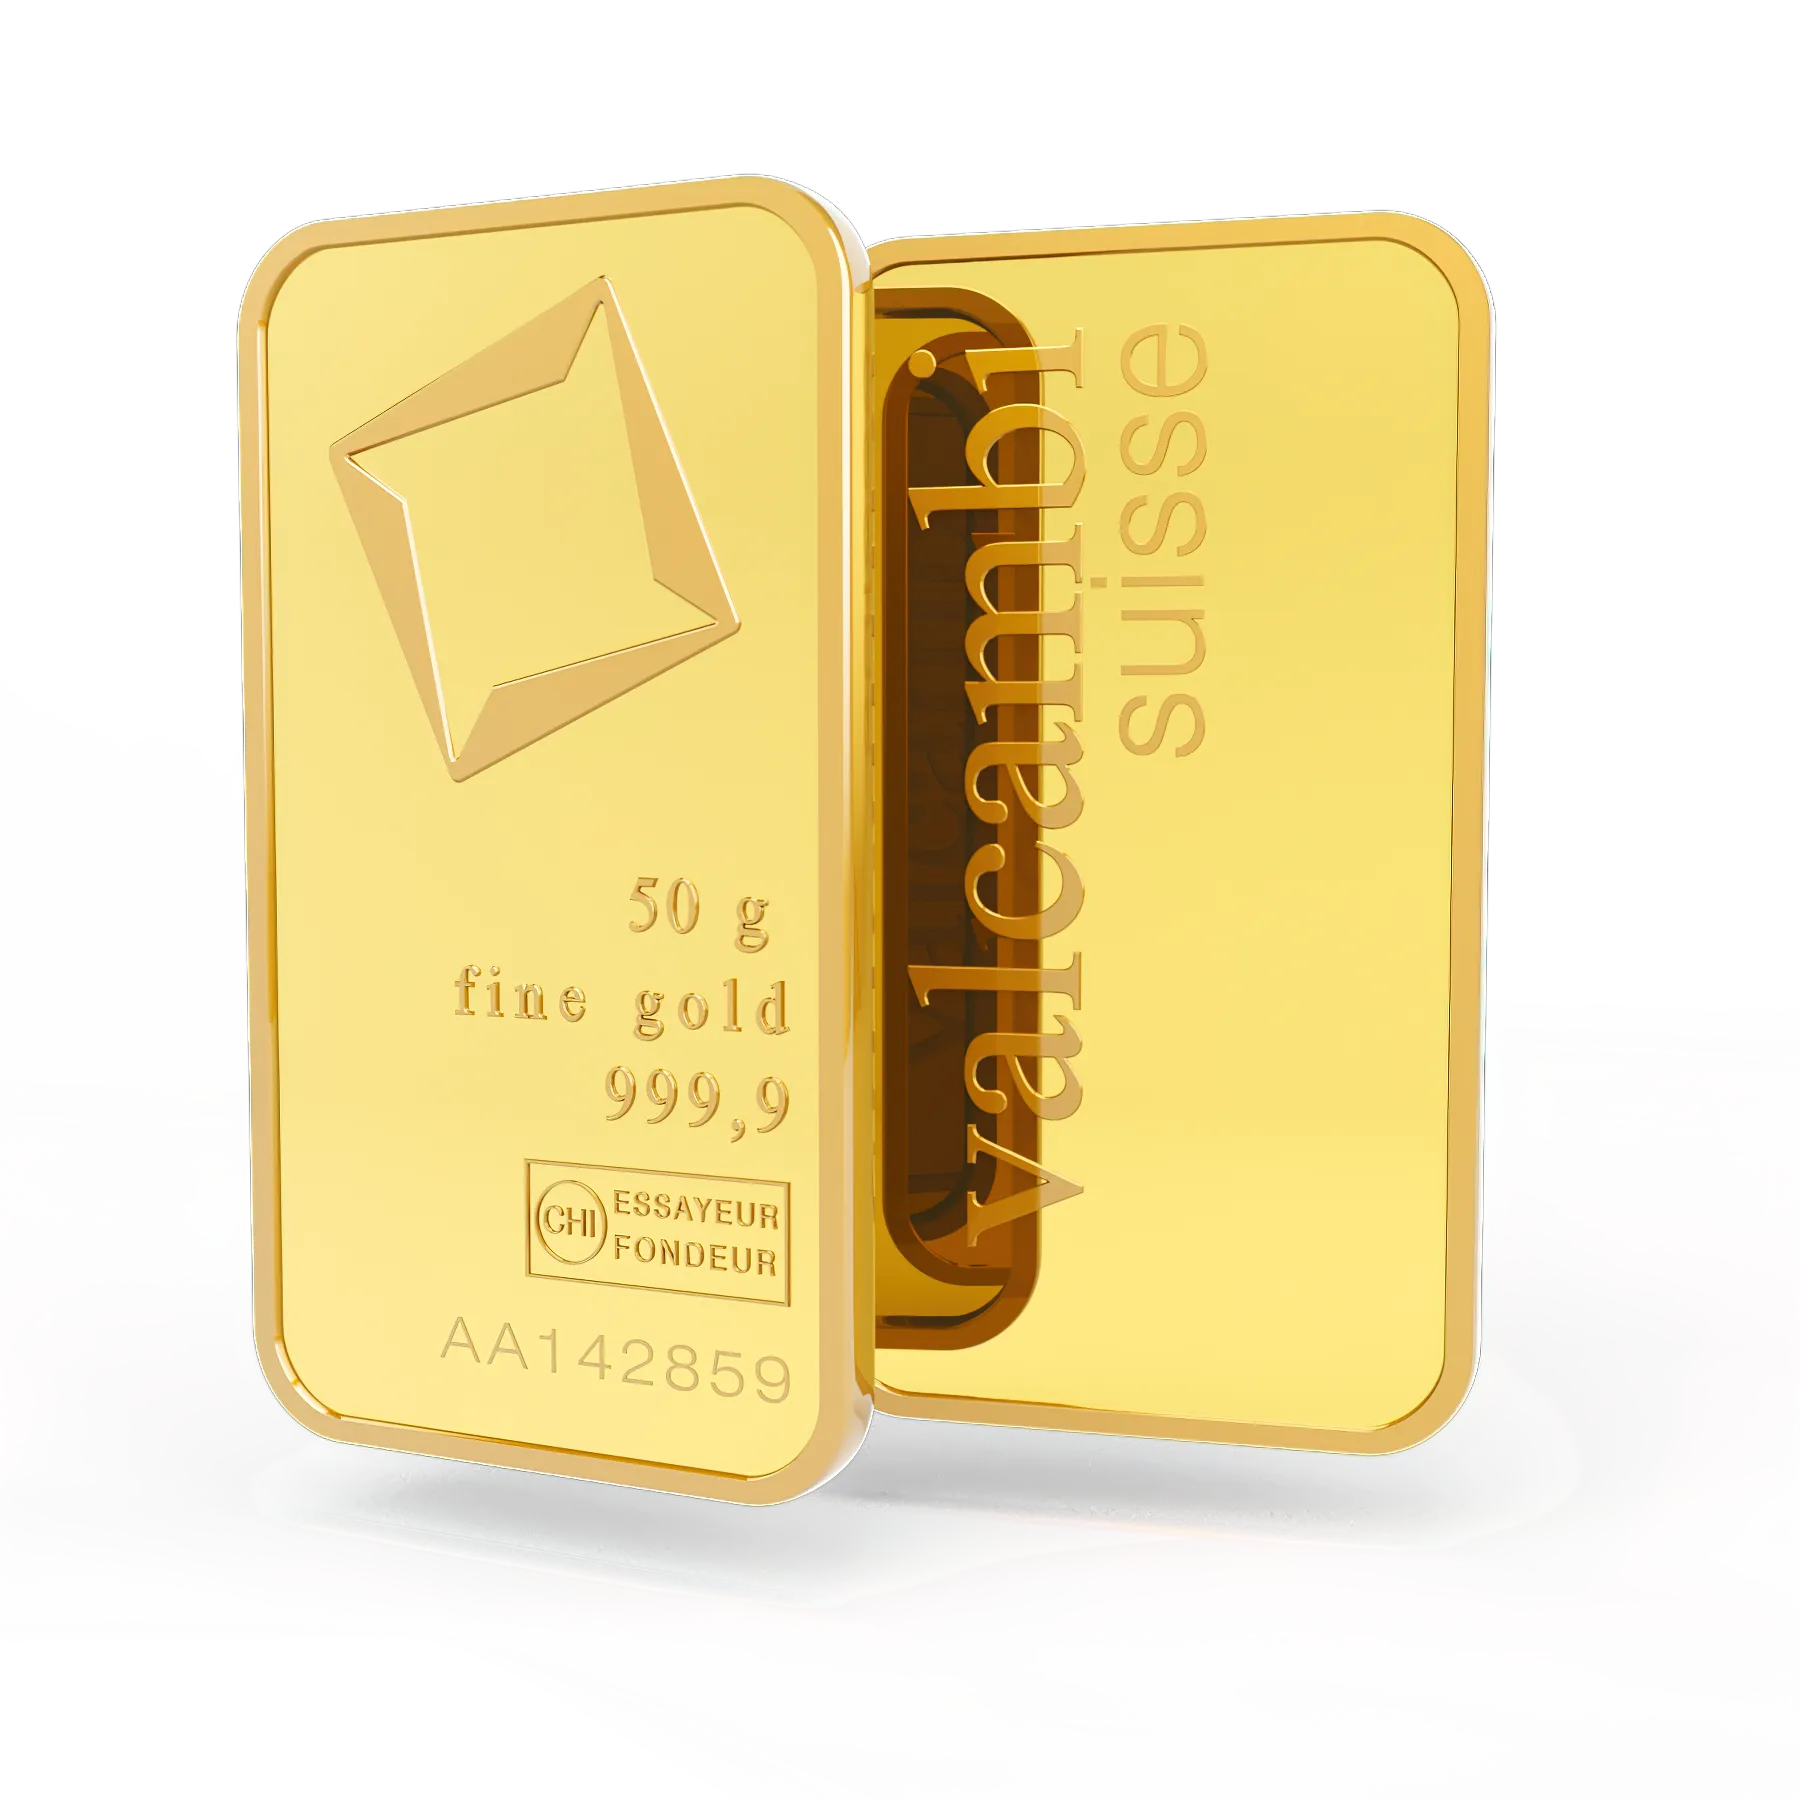 Lingou aur 50g, Elvetia, Fine Gold, 999,9